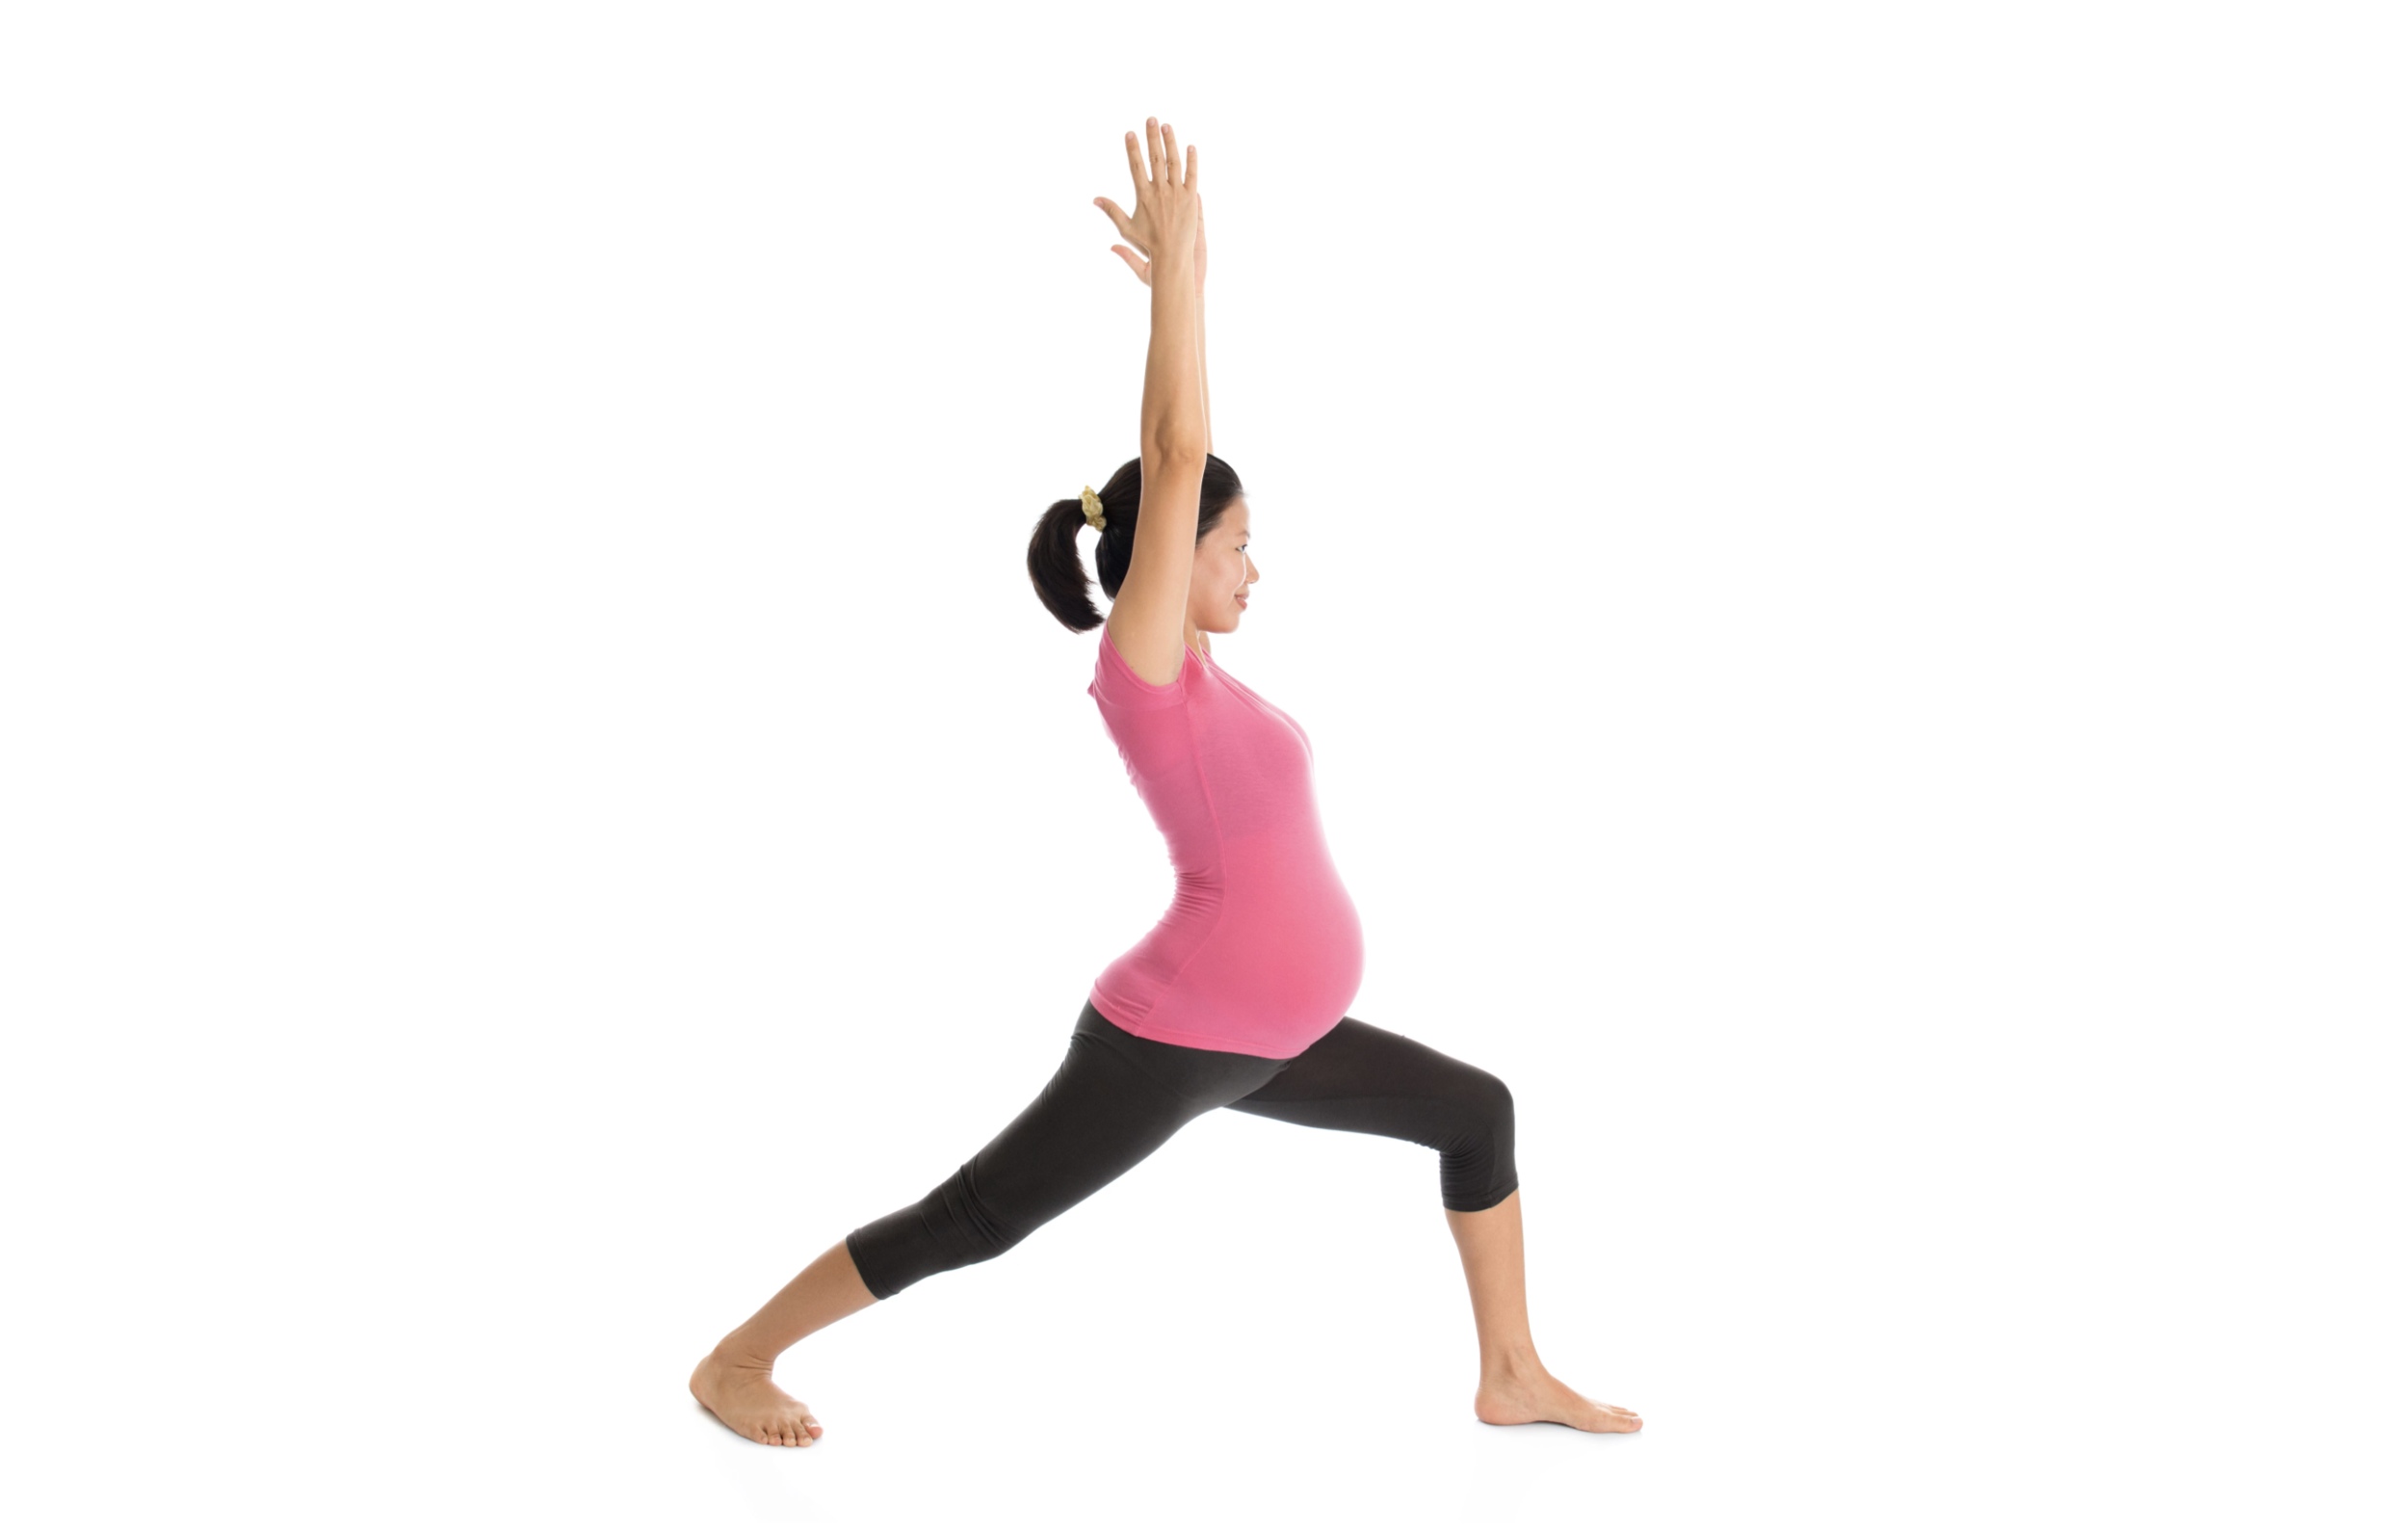 13 Pregnancy Yoga Exercises for The Last Trimester - LifeHack